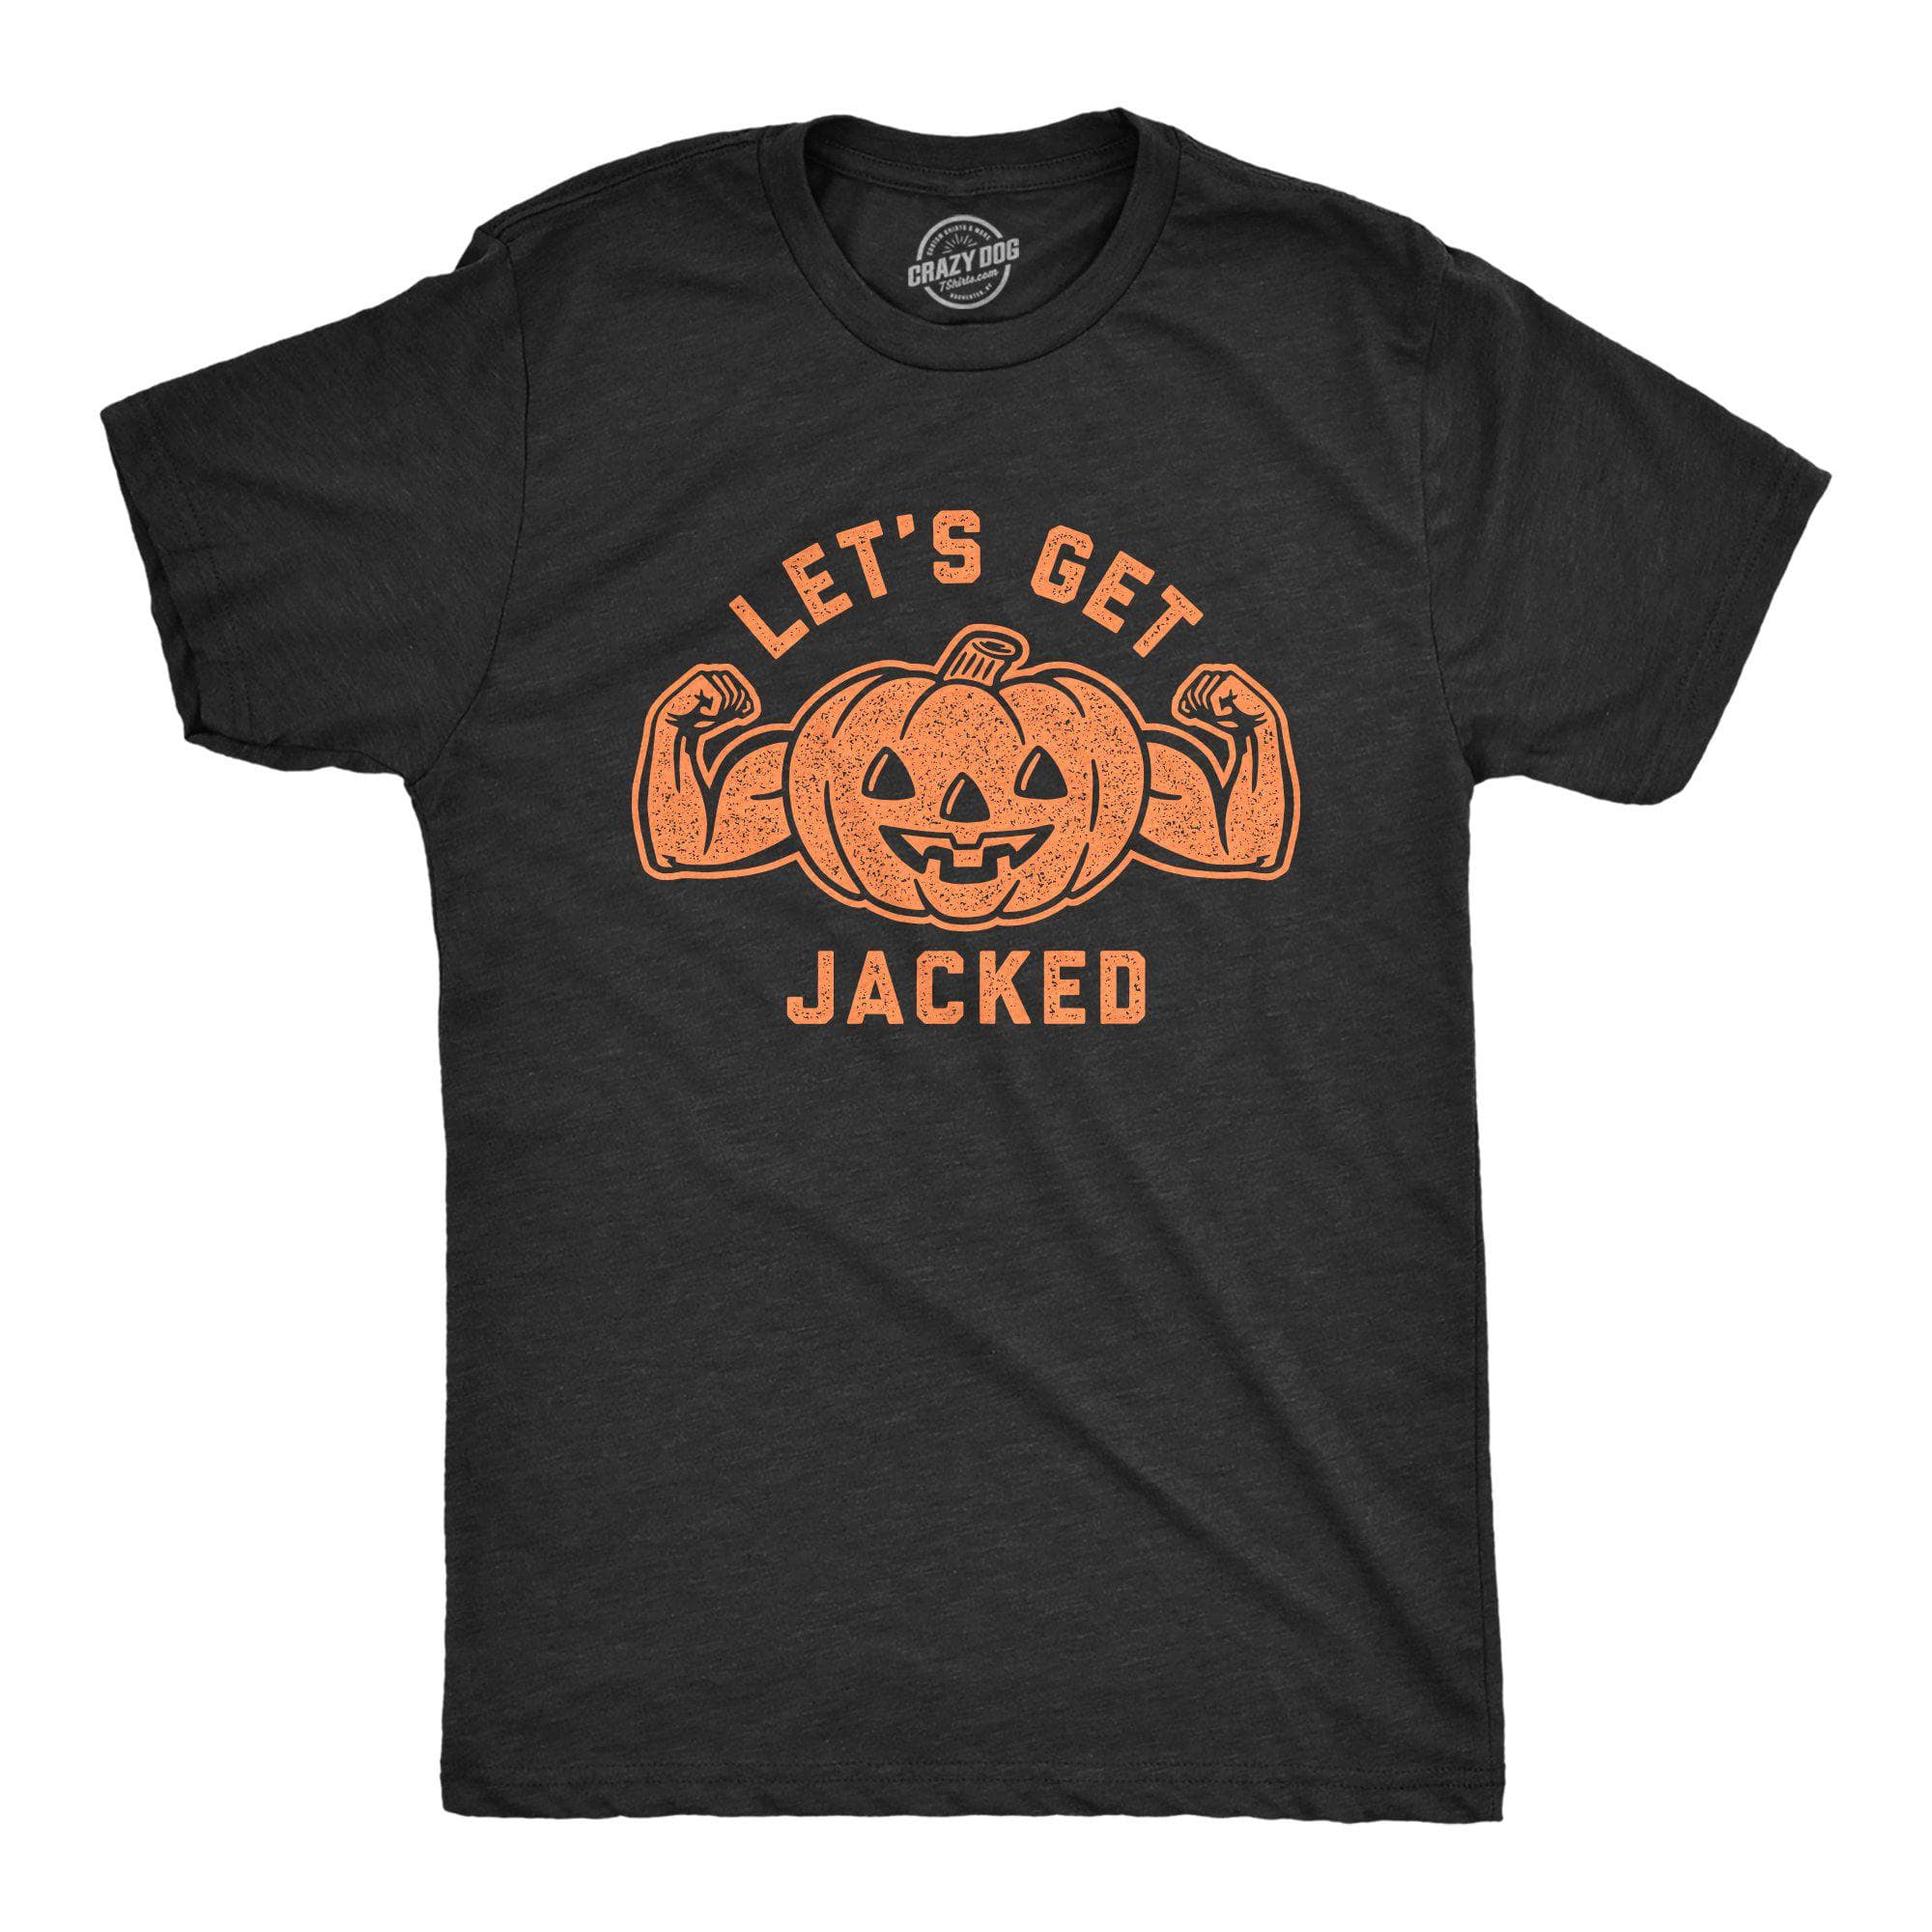 Let's Get Jacked Men's Tshirt - Crazy Dog T-Shirts